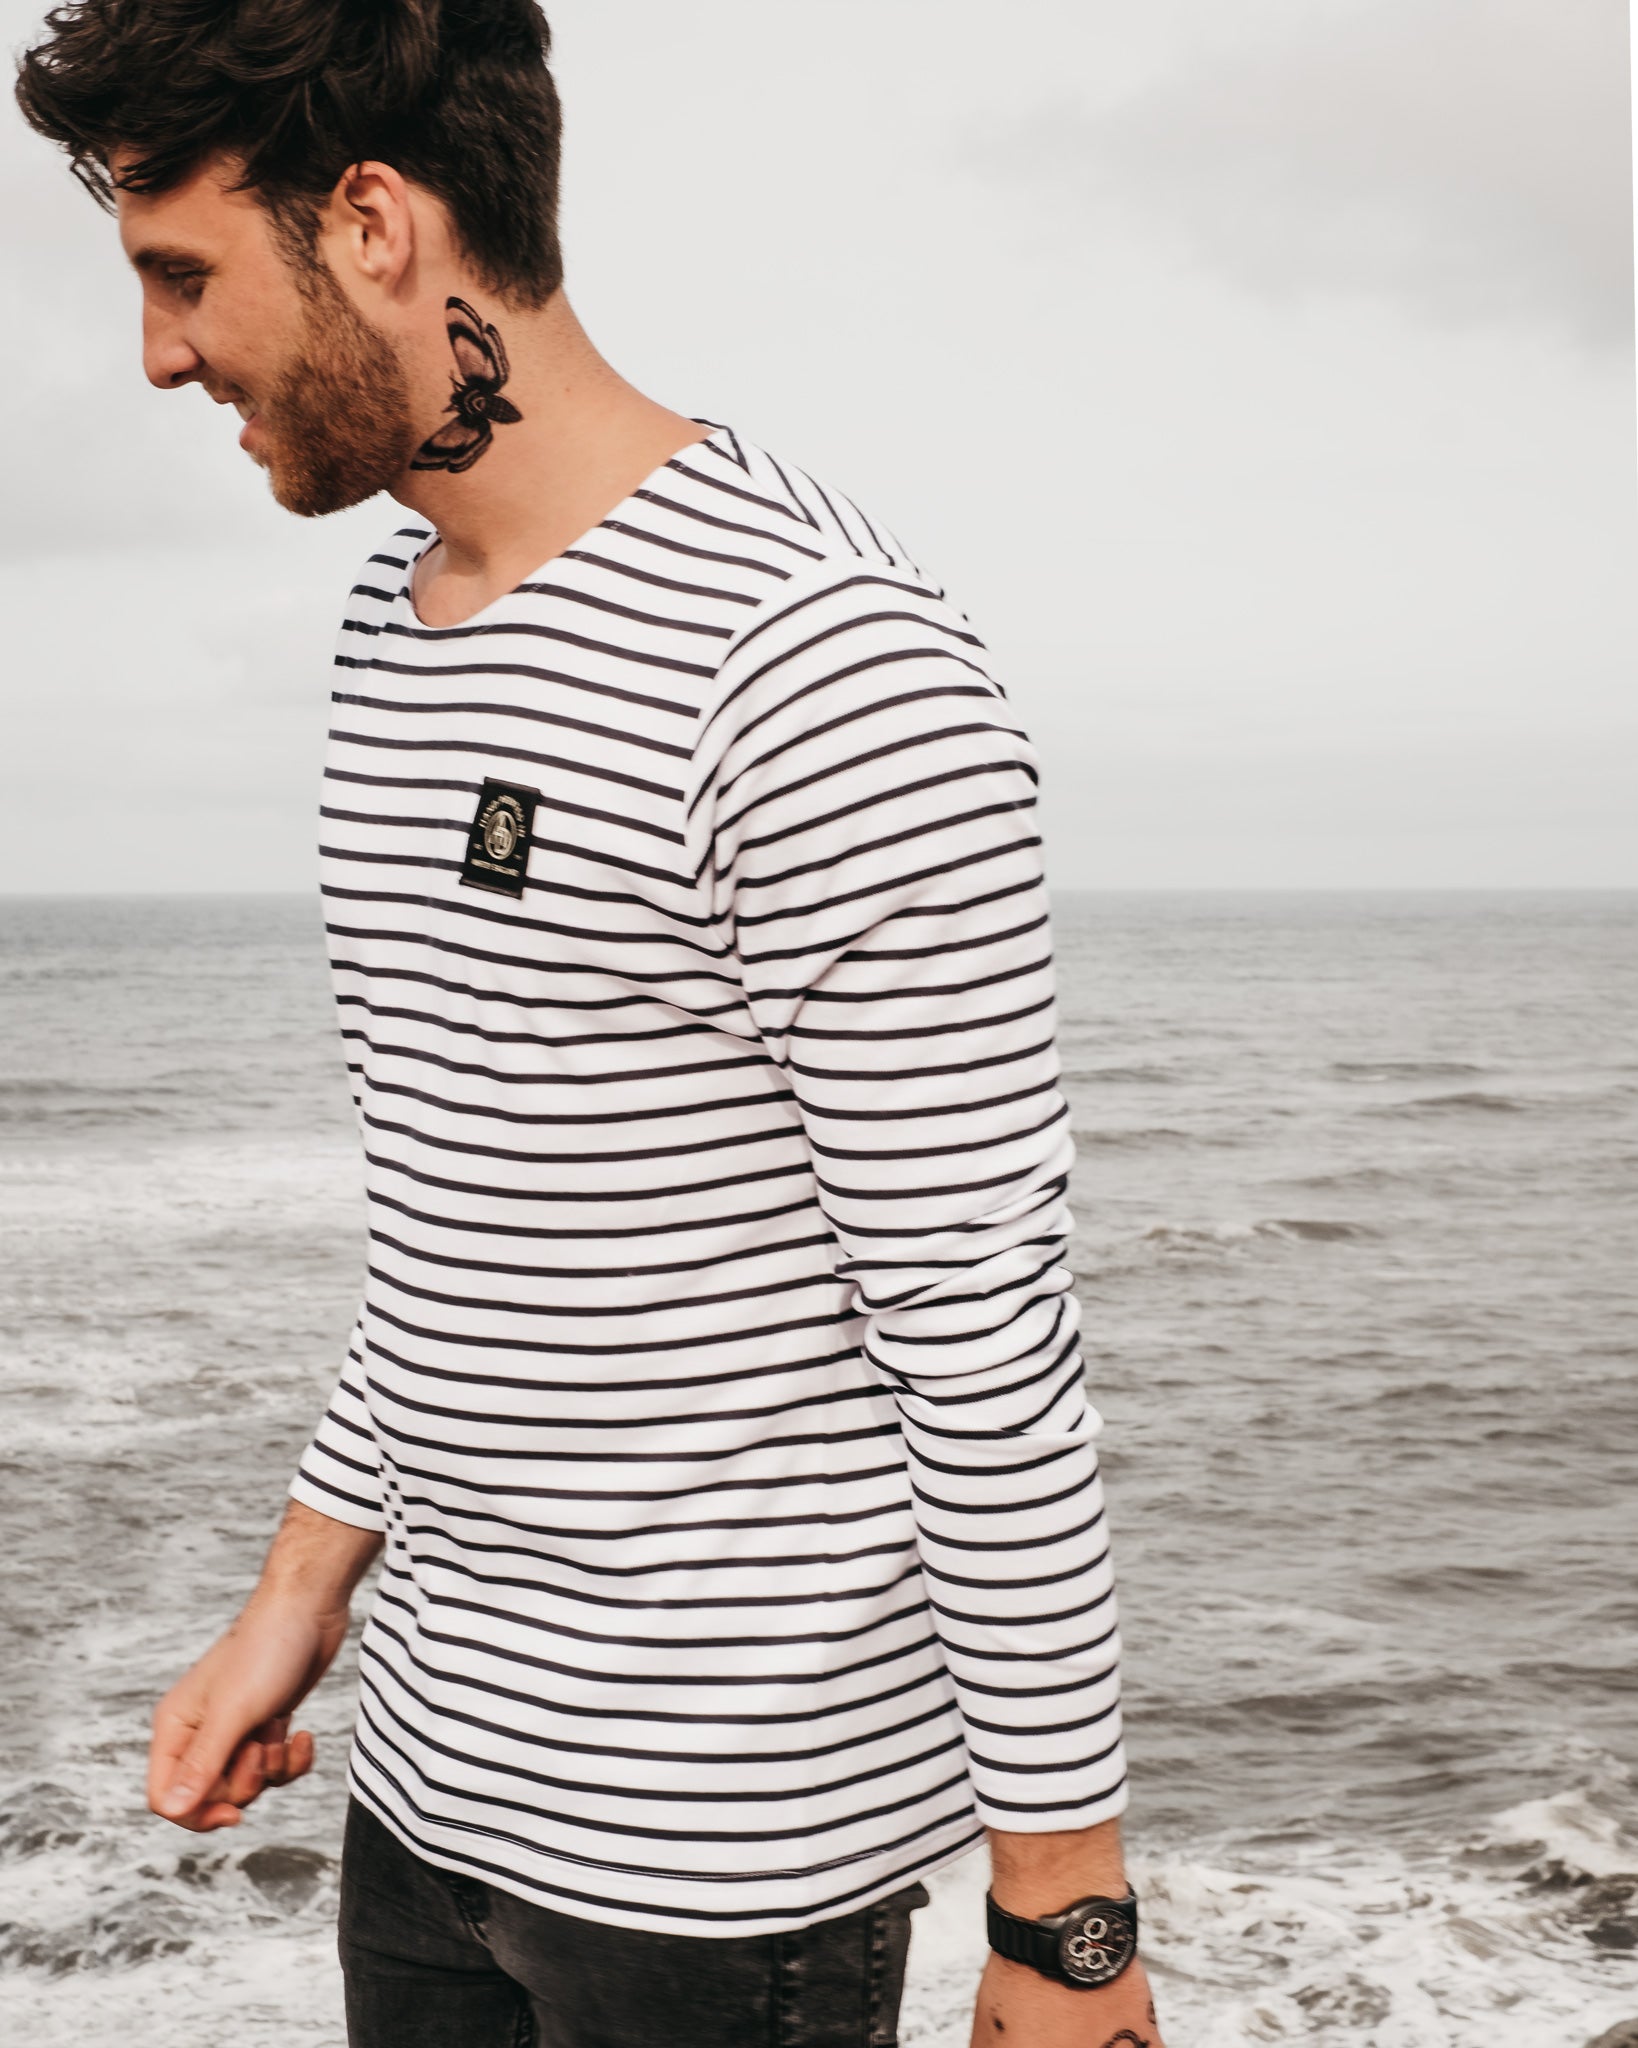 'Insignia' Striped Breton Long Sleeve Top by ART DISCO